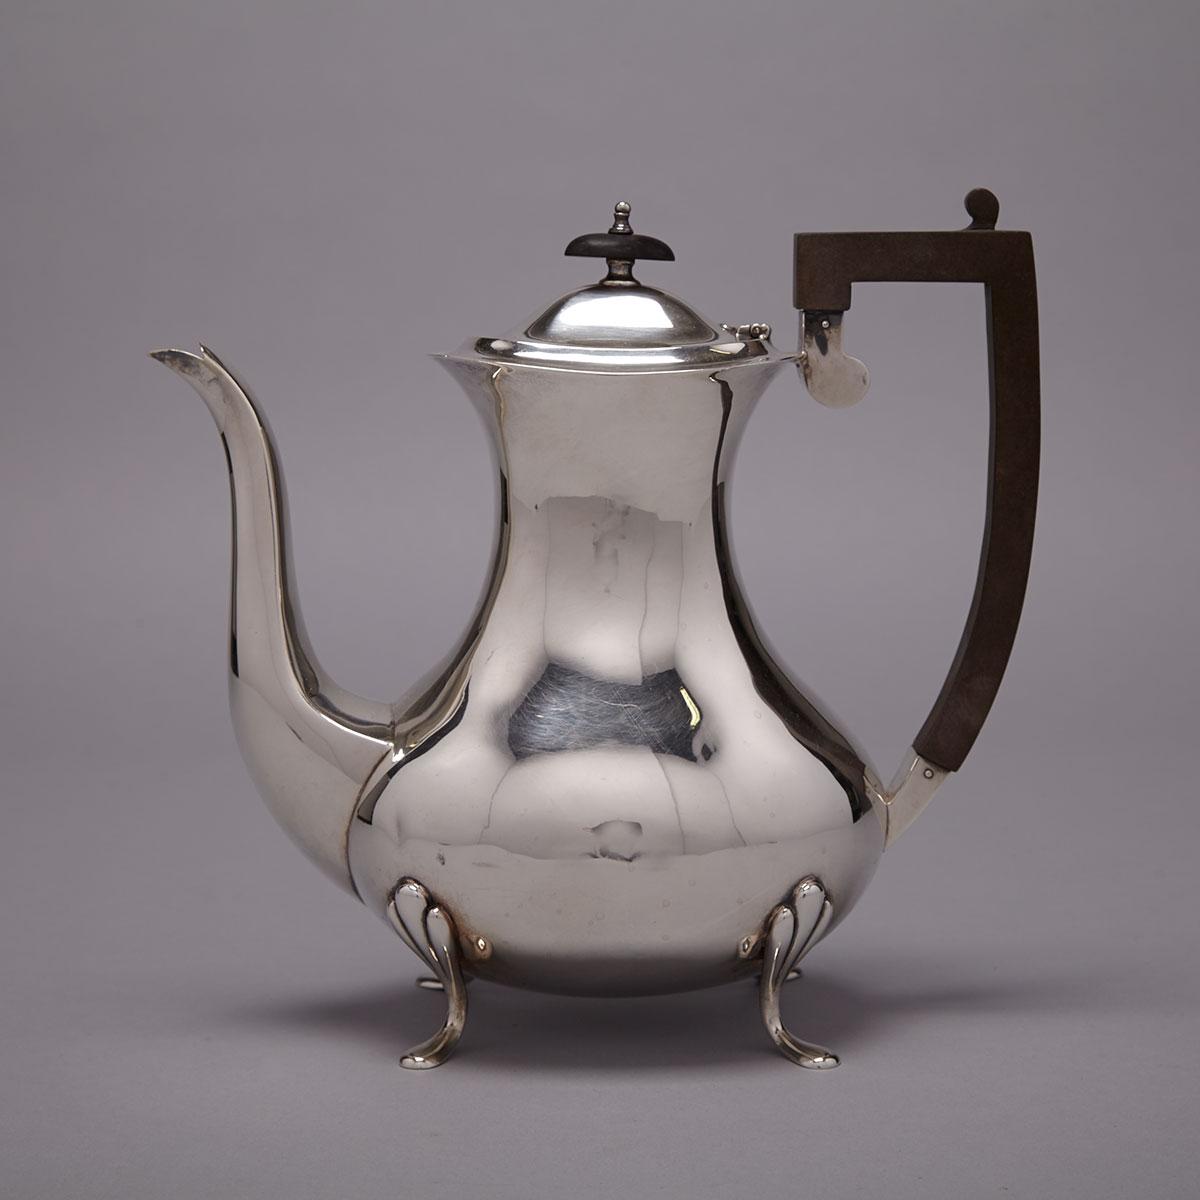 Canadian Silver Coffee Pot, J.E. Ellis & Co., Toronto, Ont., early 20th century